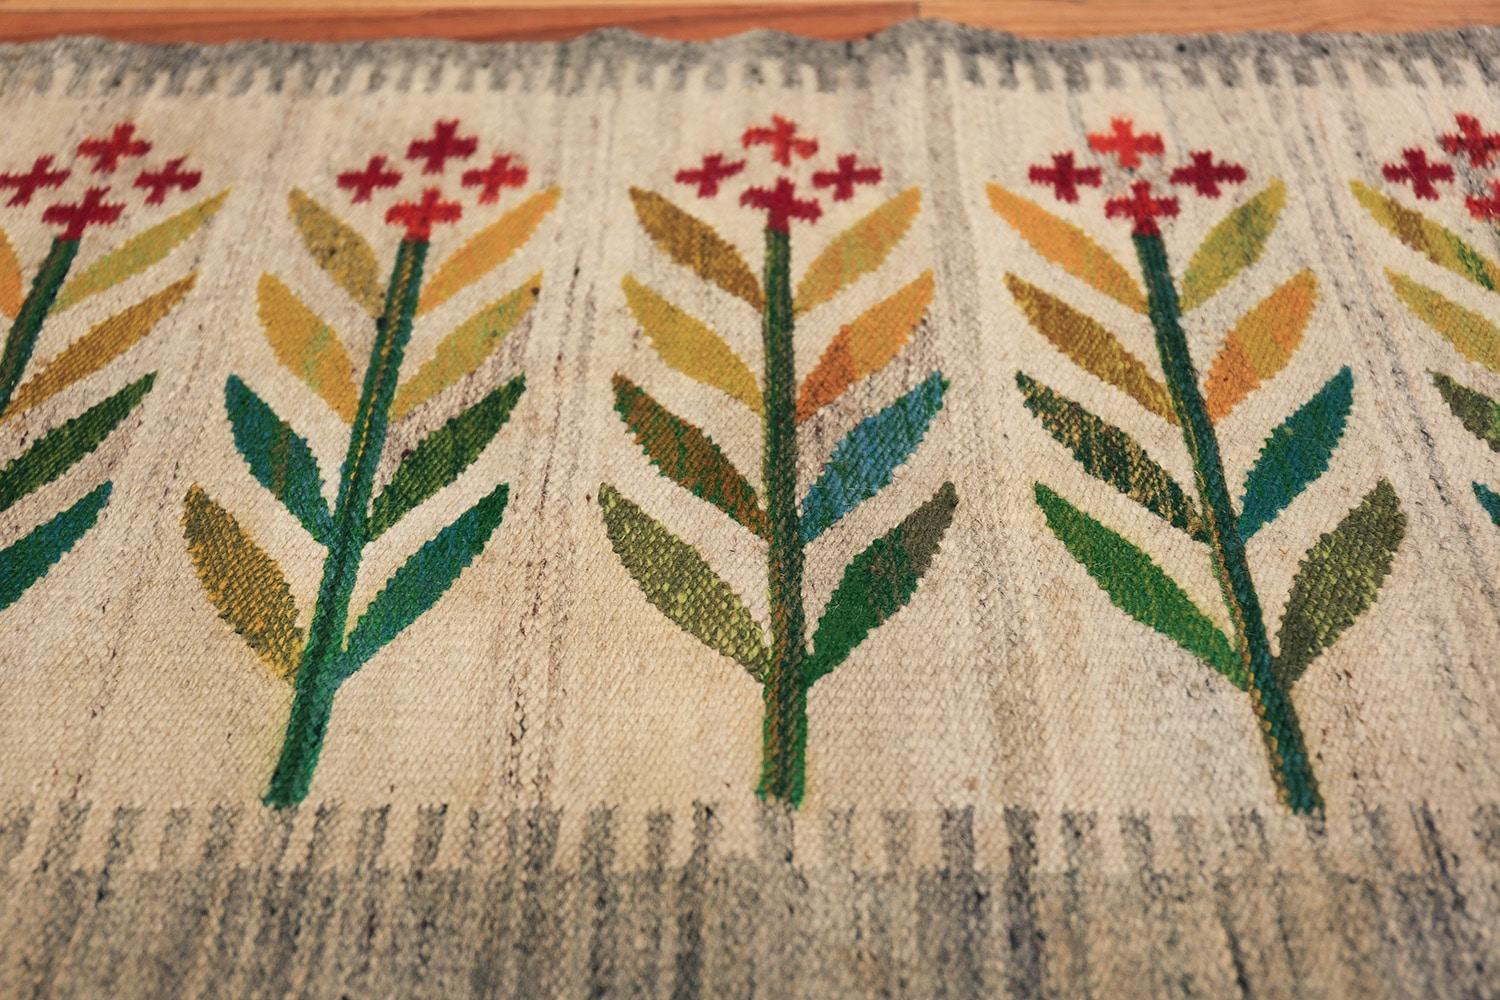 Vintage Swedish rug, origin Scandinavia, circa mid-20th century. Size: 5 ft 6 in x 7 ft 10 in (1.68 m x 2.39 m)

